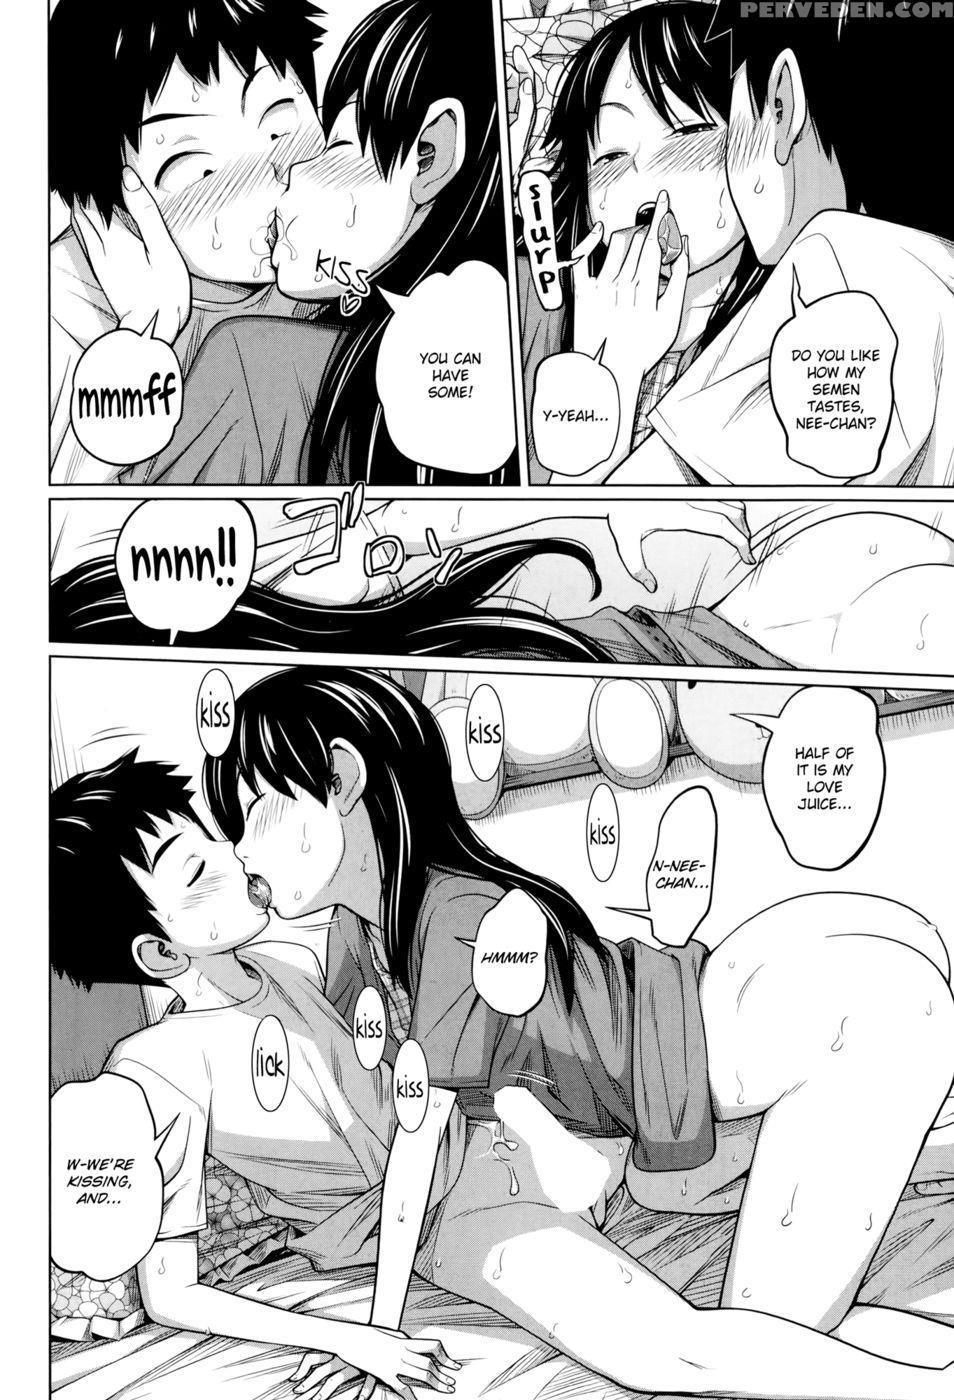 Sex manga with Manga (anime)